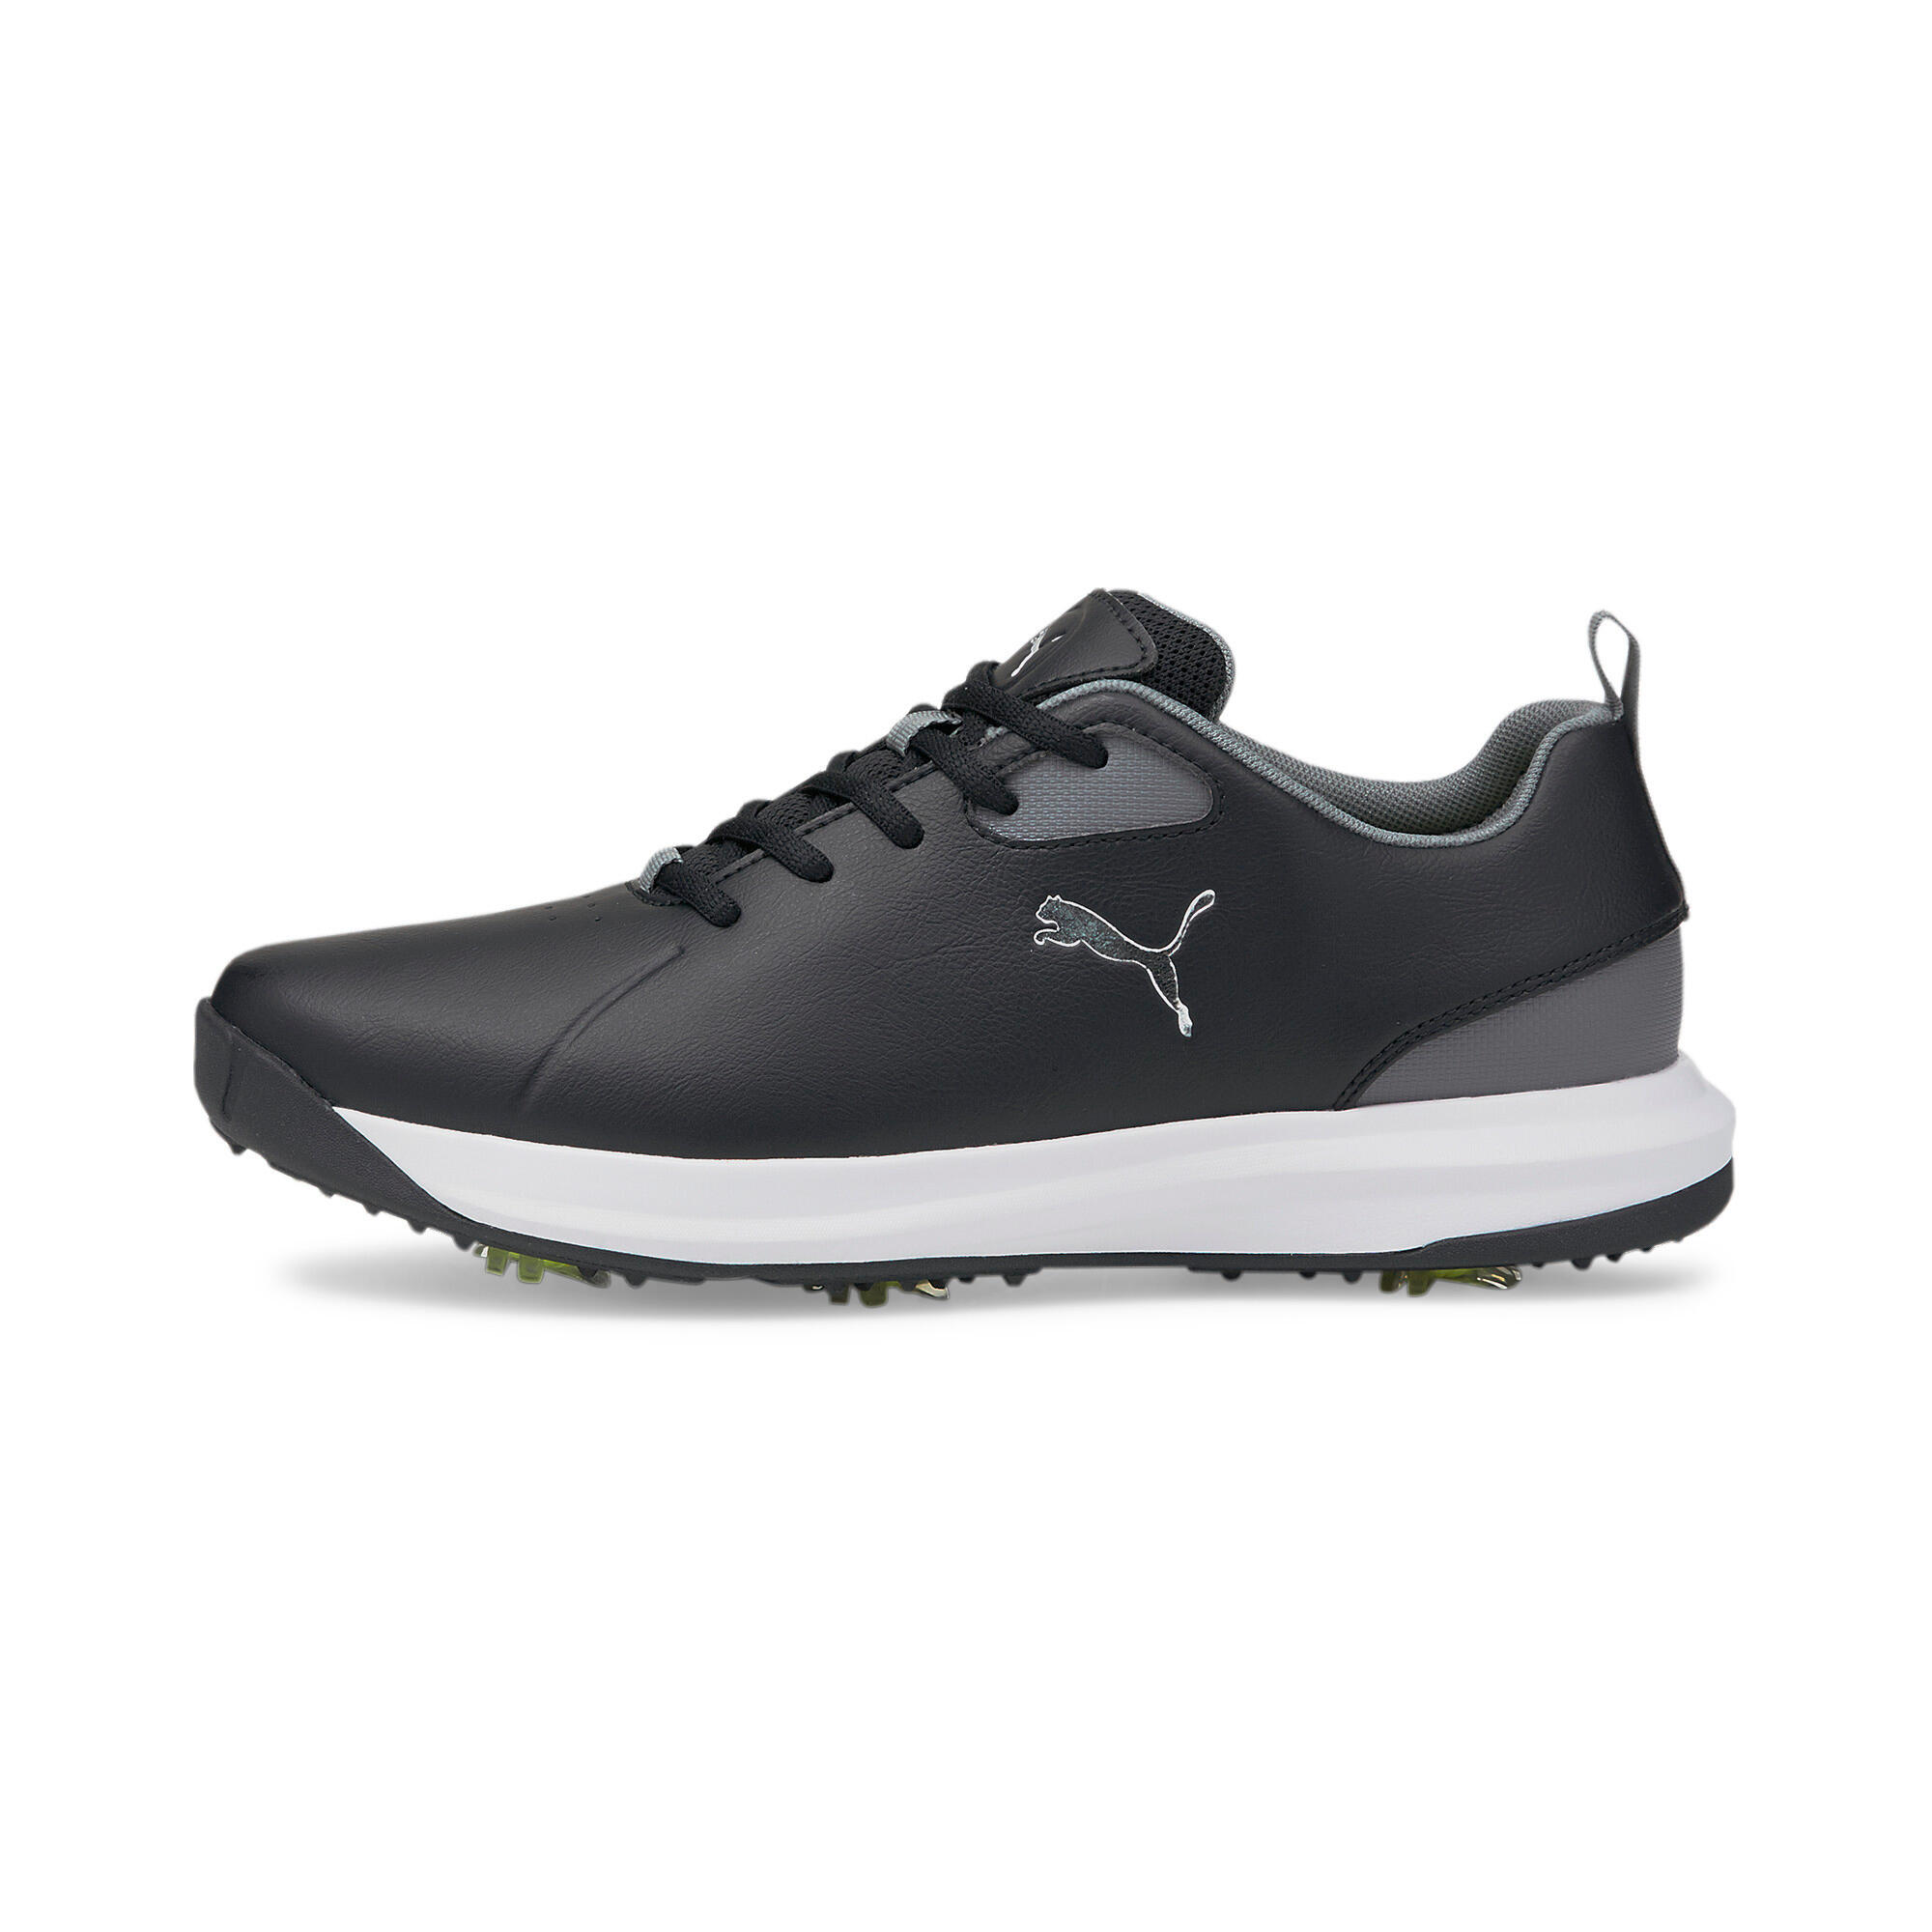 PUMA Mens FUSION FX Tech Golf Shoes - Black-Silver-Quiet Shade 1/6